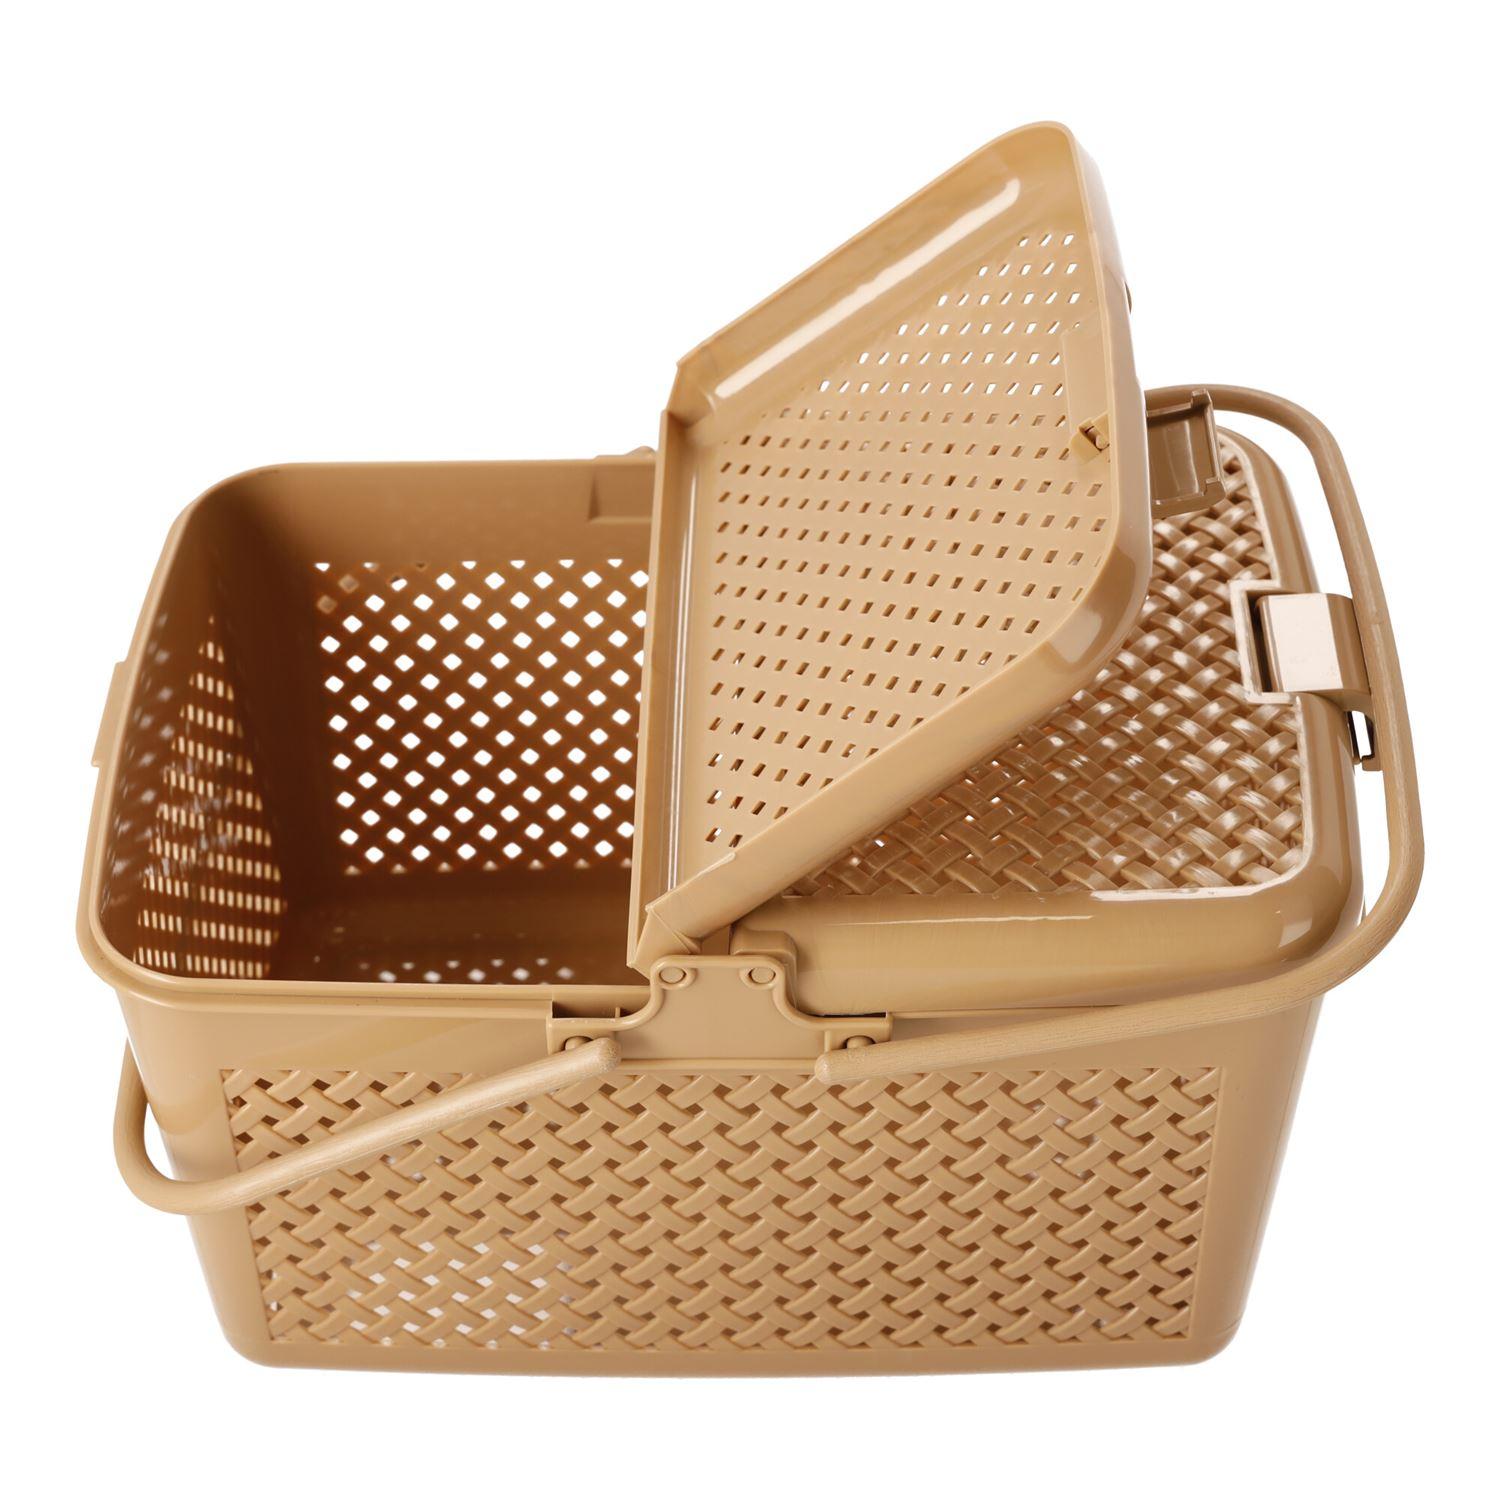 Rectangular picnic basket lockable beige, POLISH PRODUCT